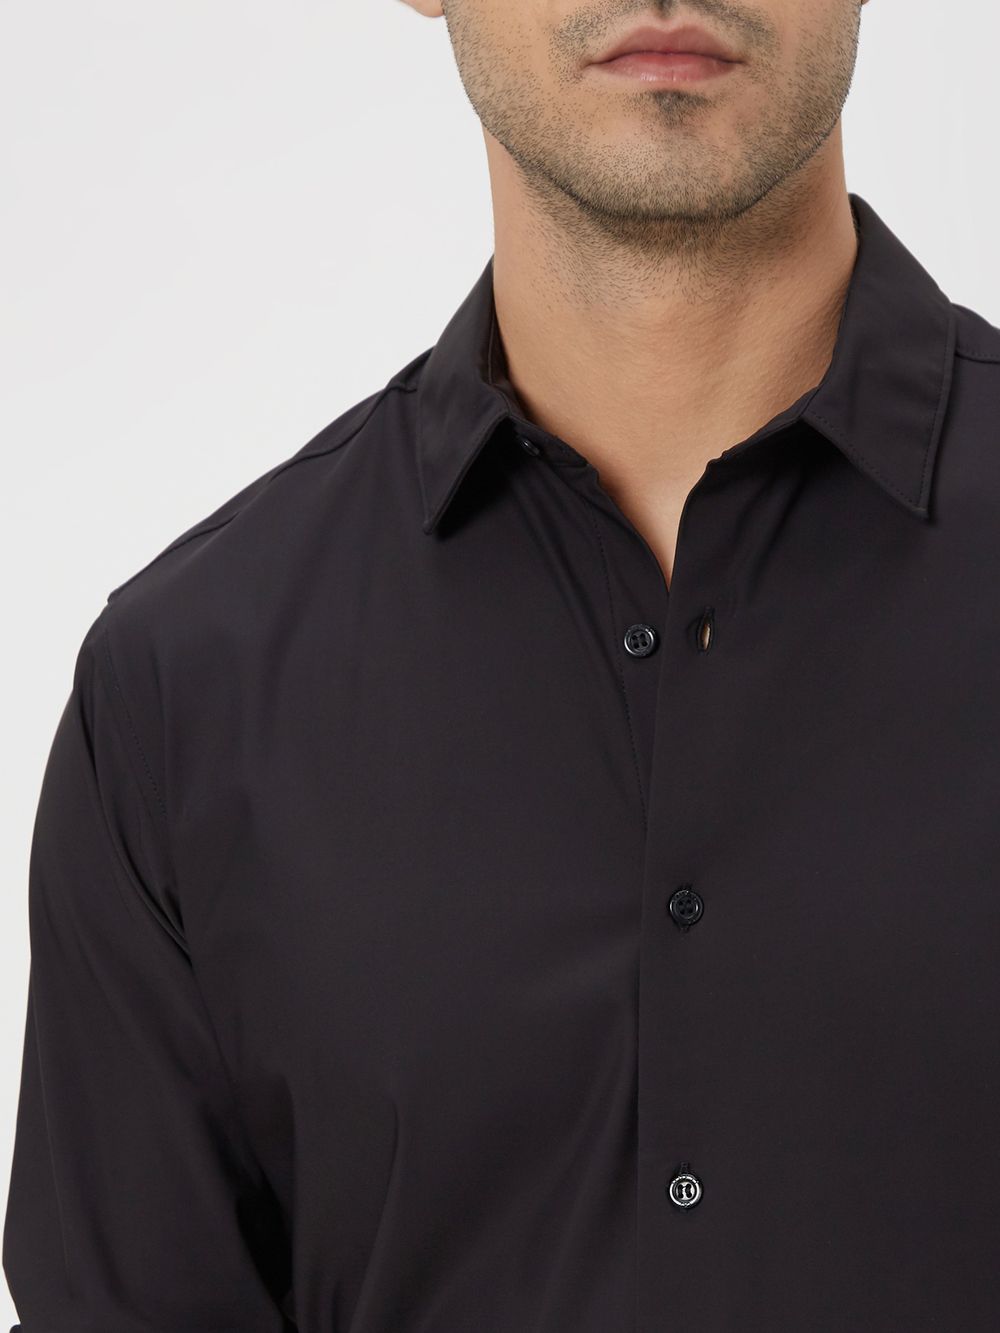 Black Knitted Plain Stretch Shirt